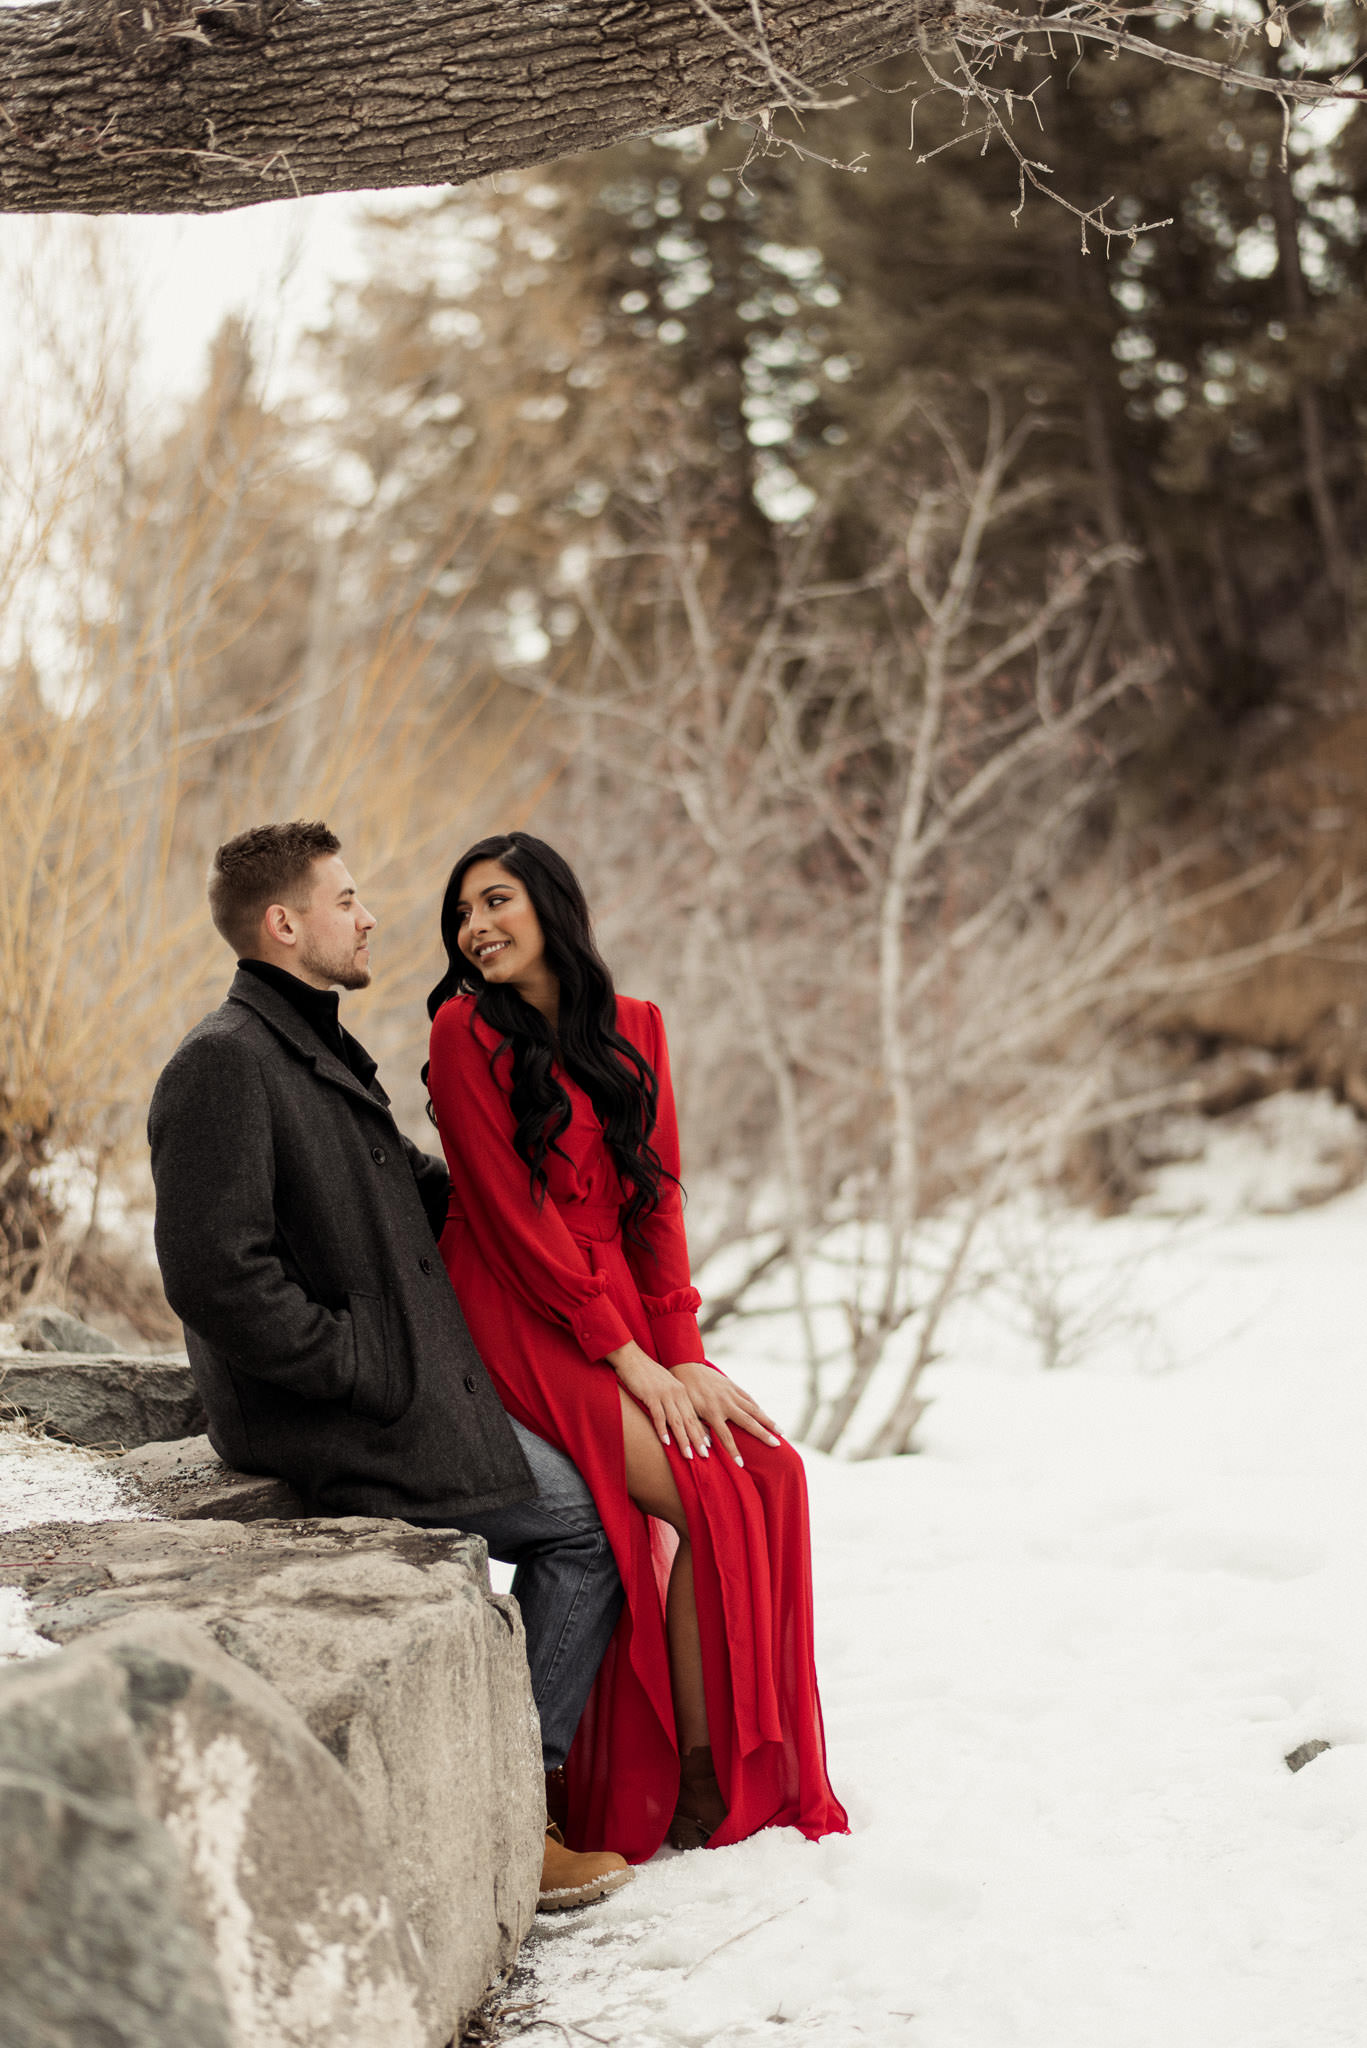 sandra-ryan-colorado-winter-snow-engagement-couples-valentines-red-houston-photographer-sm-11.jpg